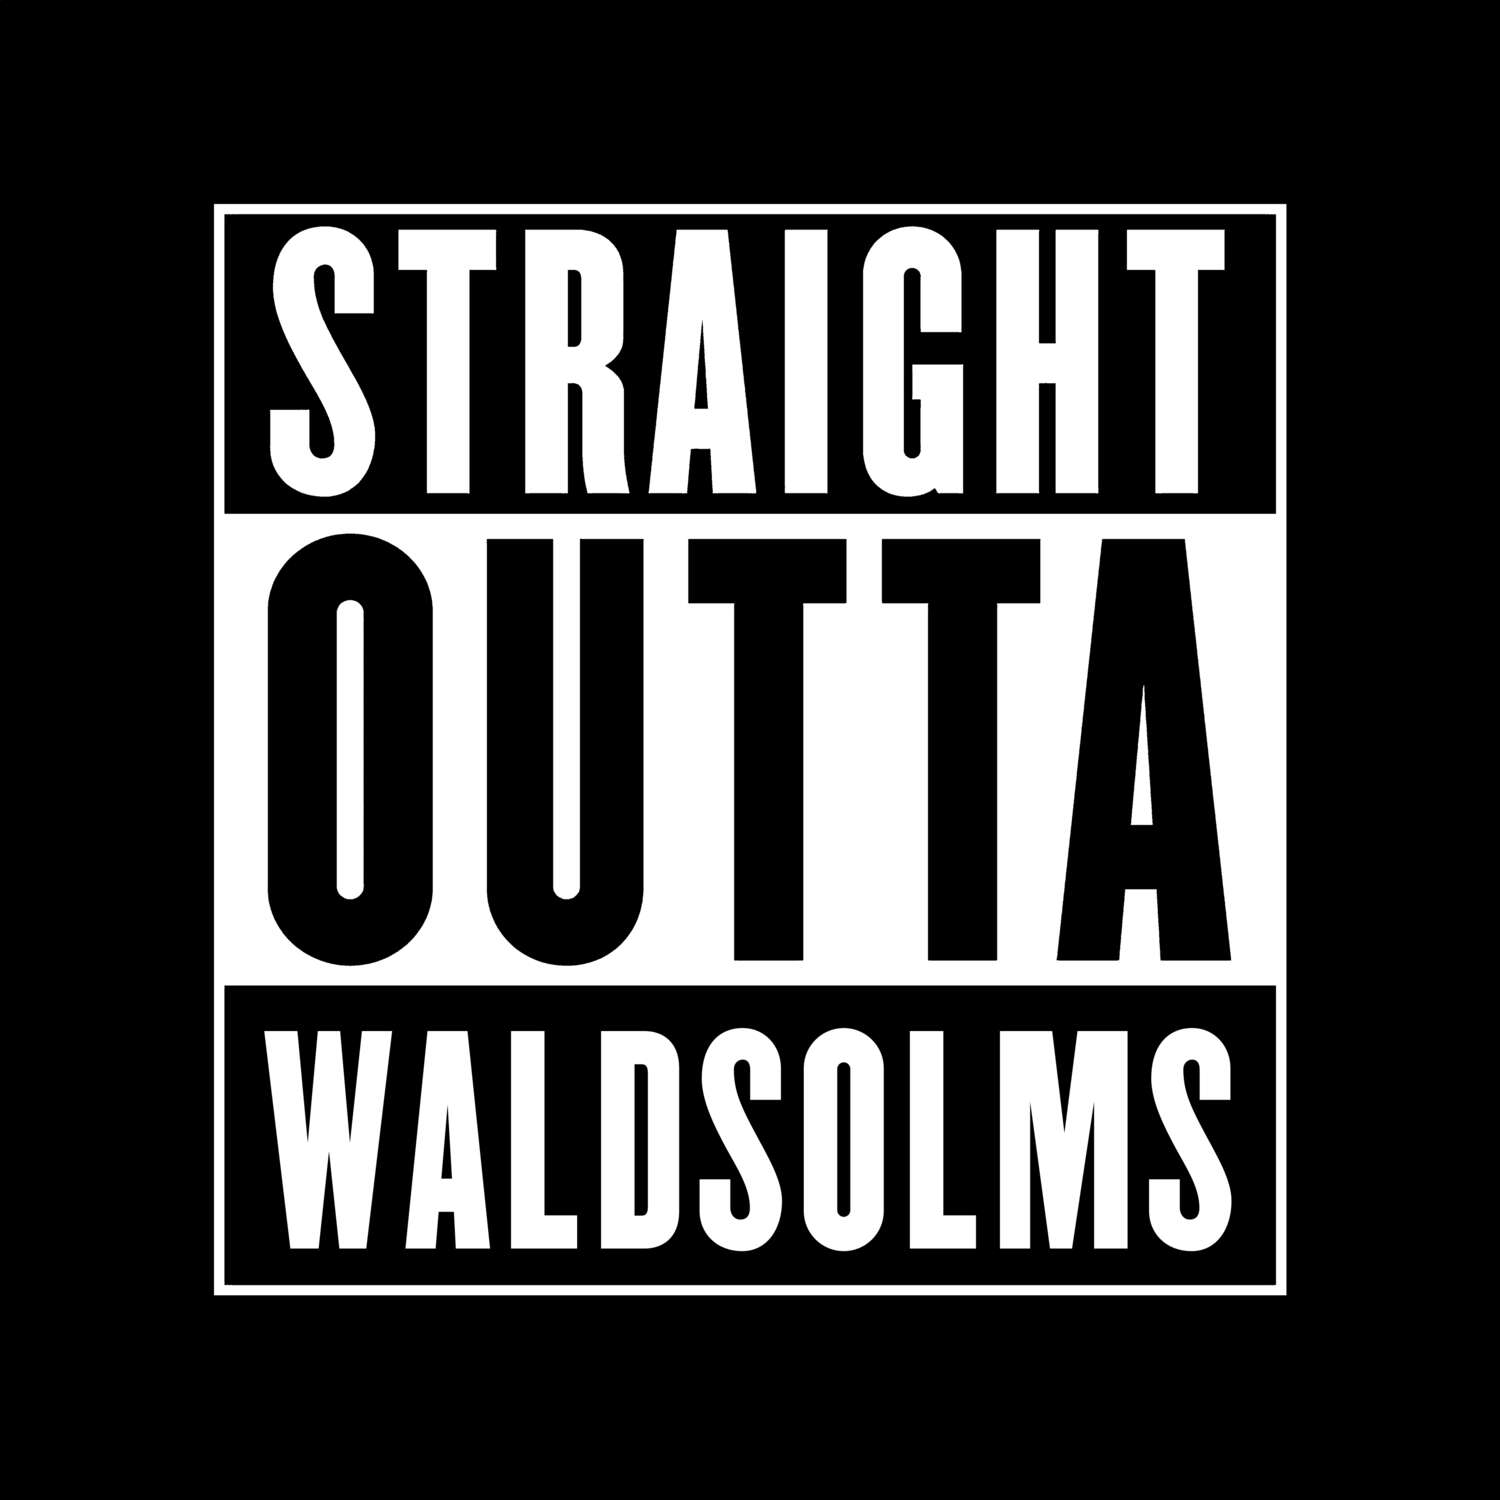 Waldsolms T-Shirt »Straight Outta«